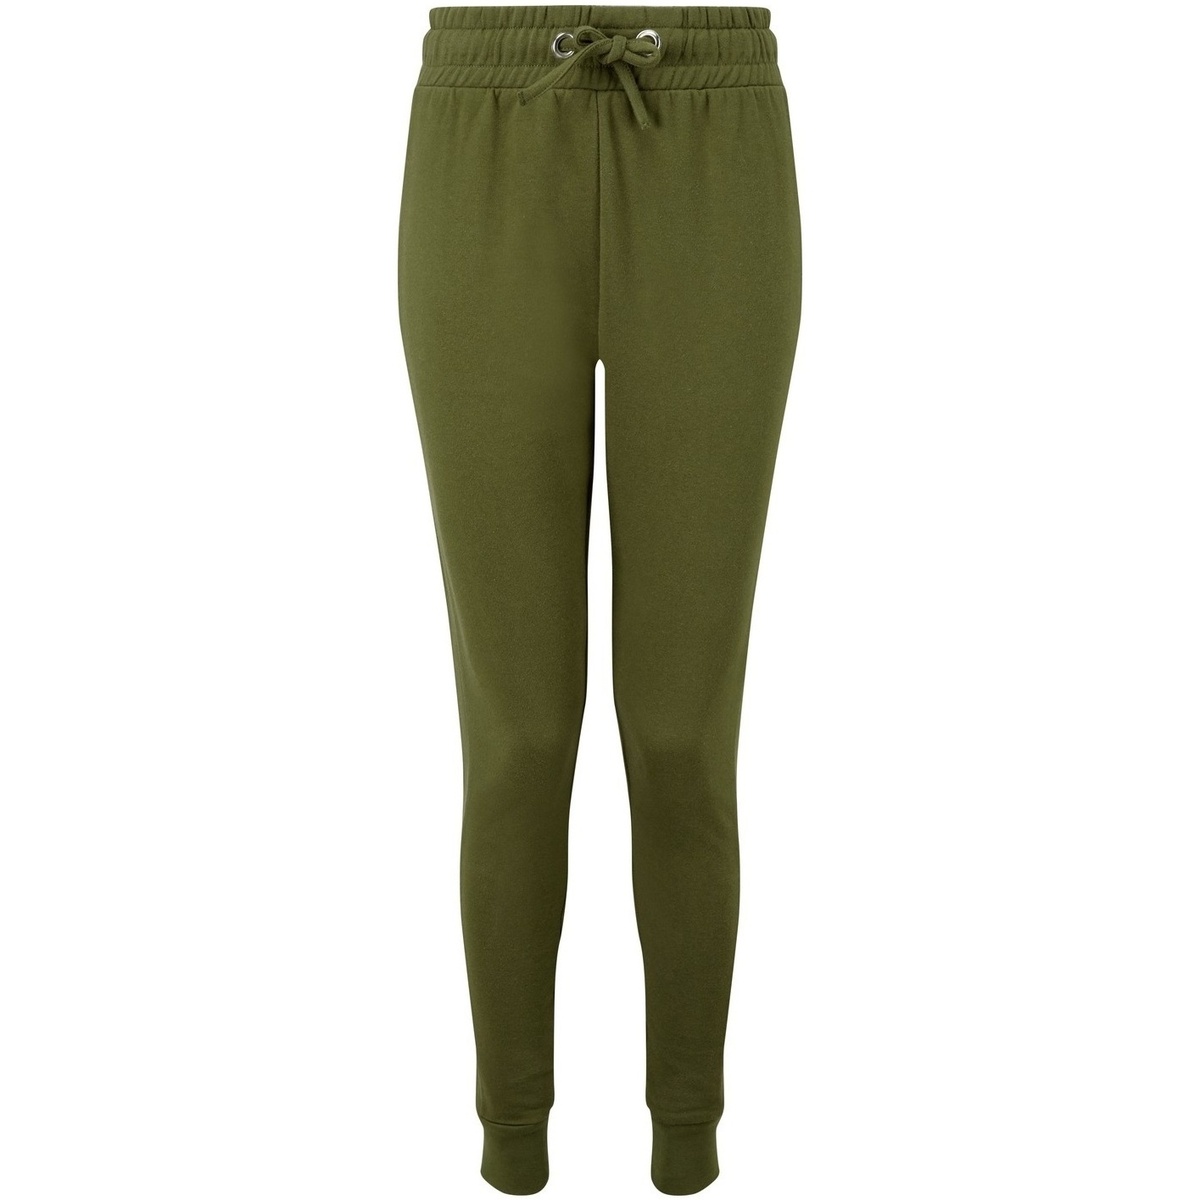 textil Mujer Pantalones Tridri TR055 Verde